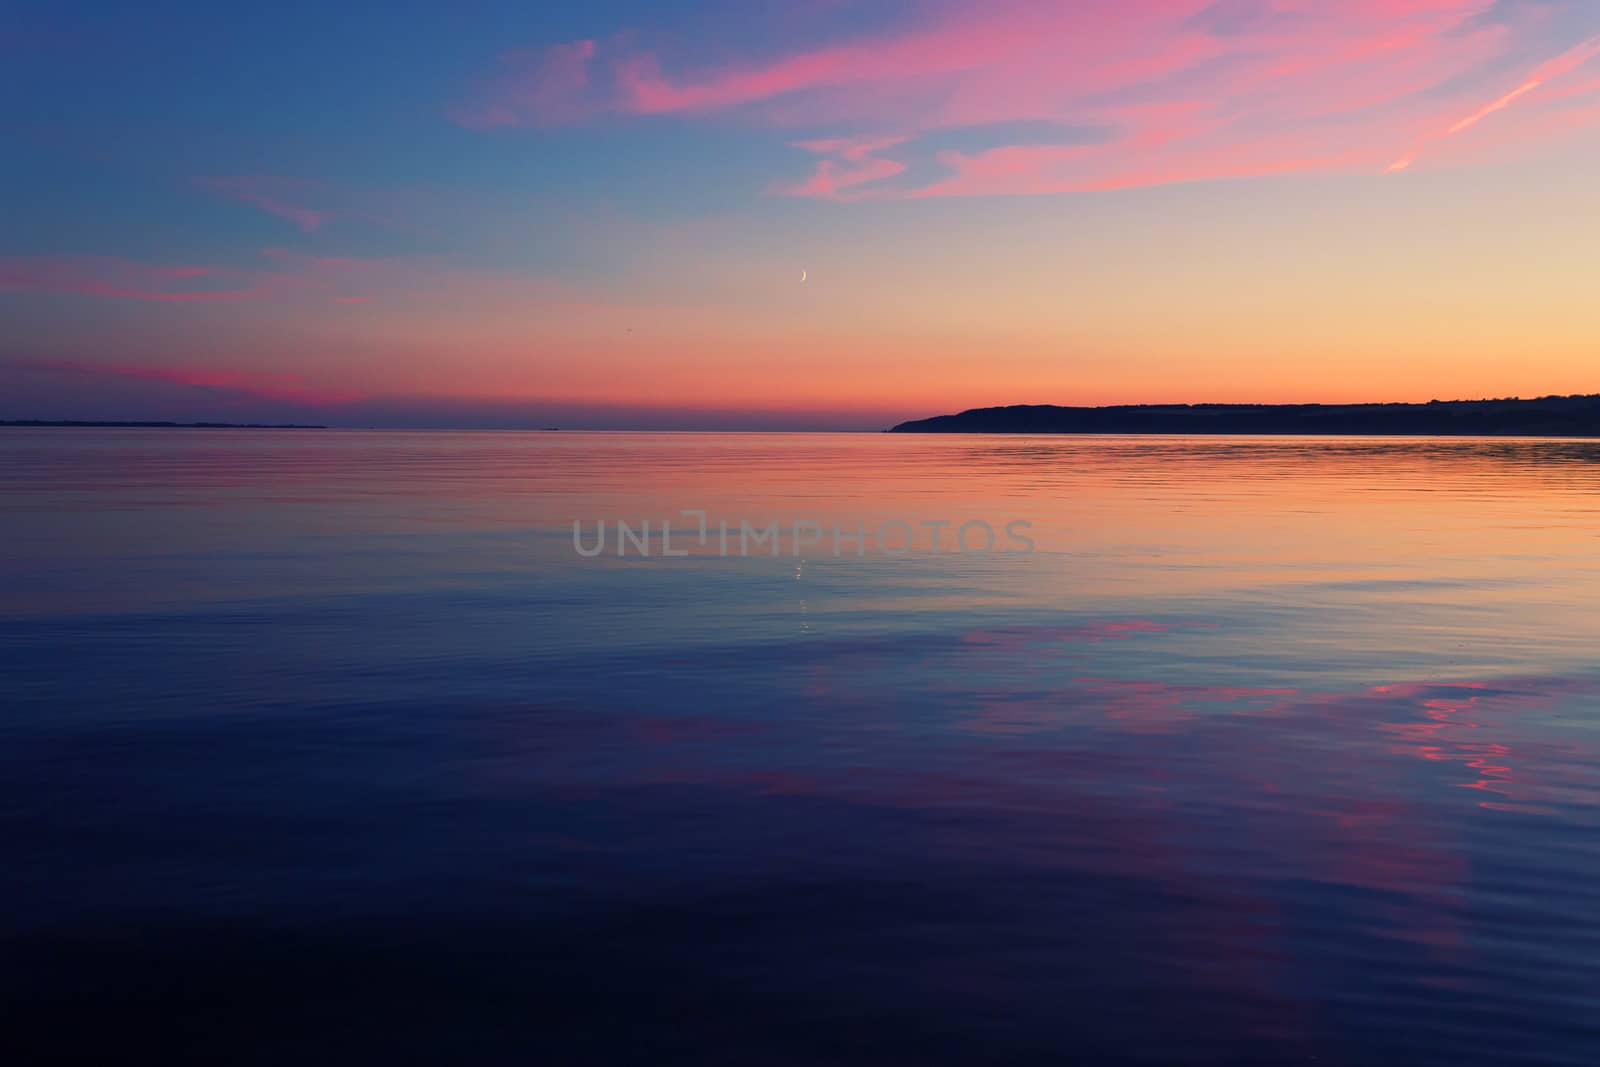 Scenic sunset over ocean beach by liwei12